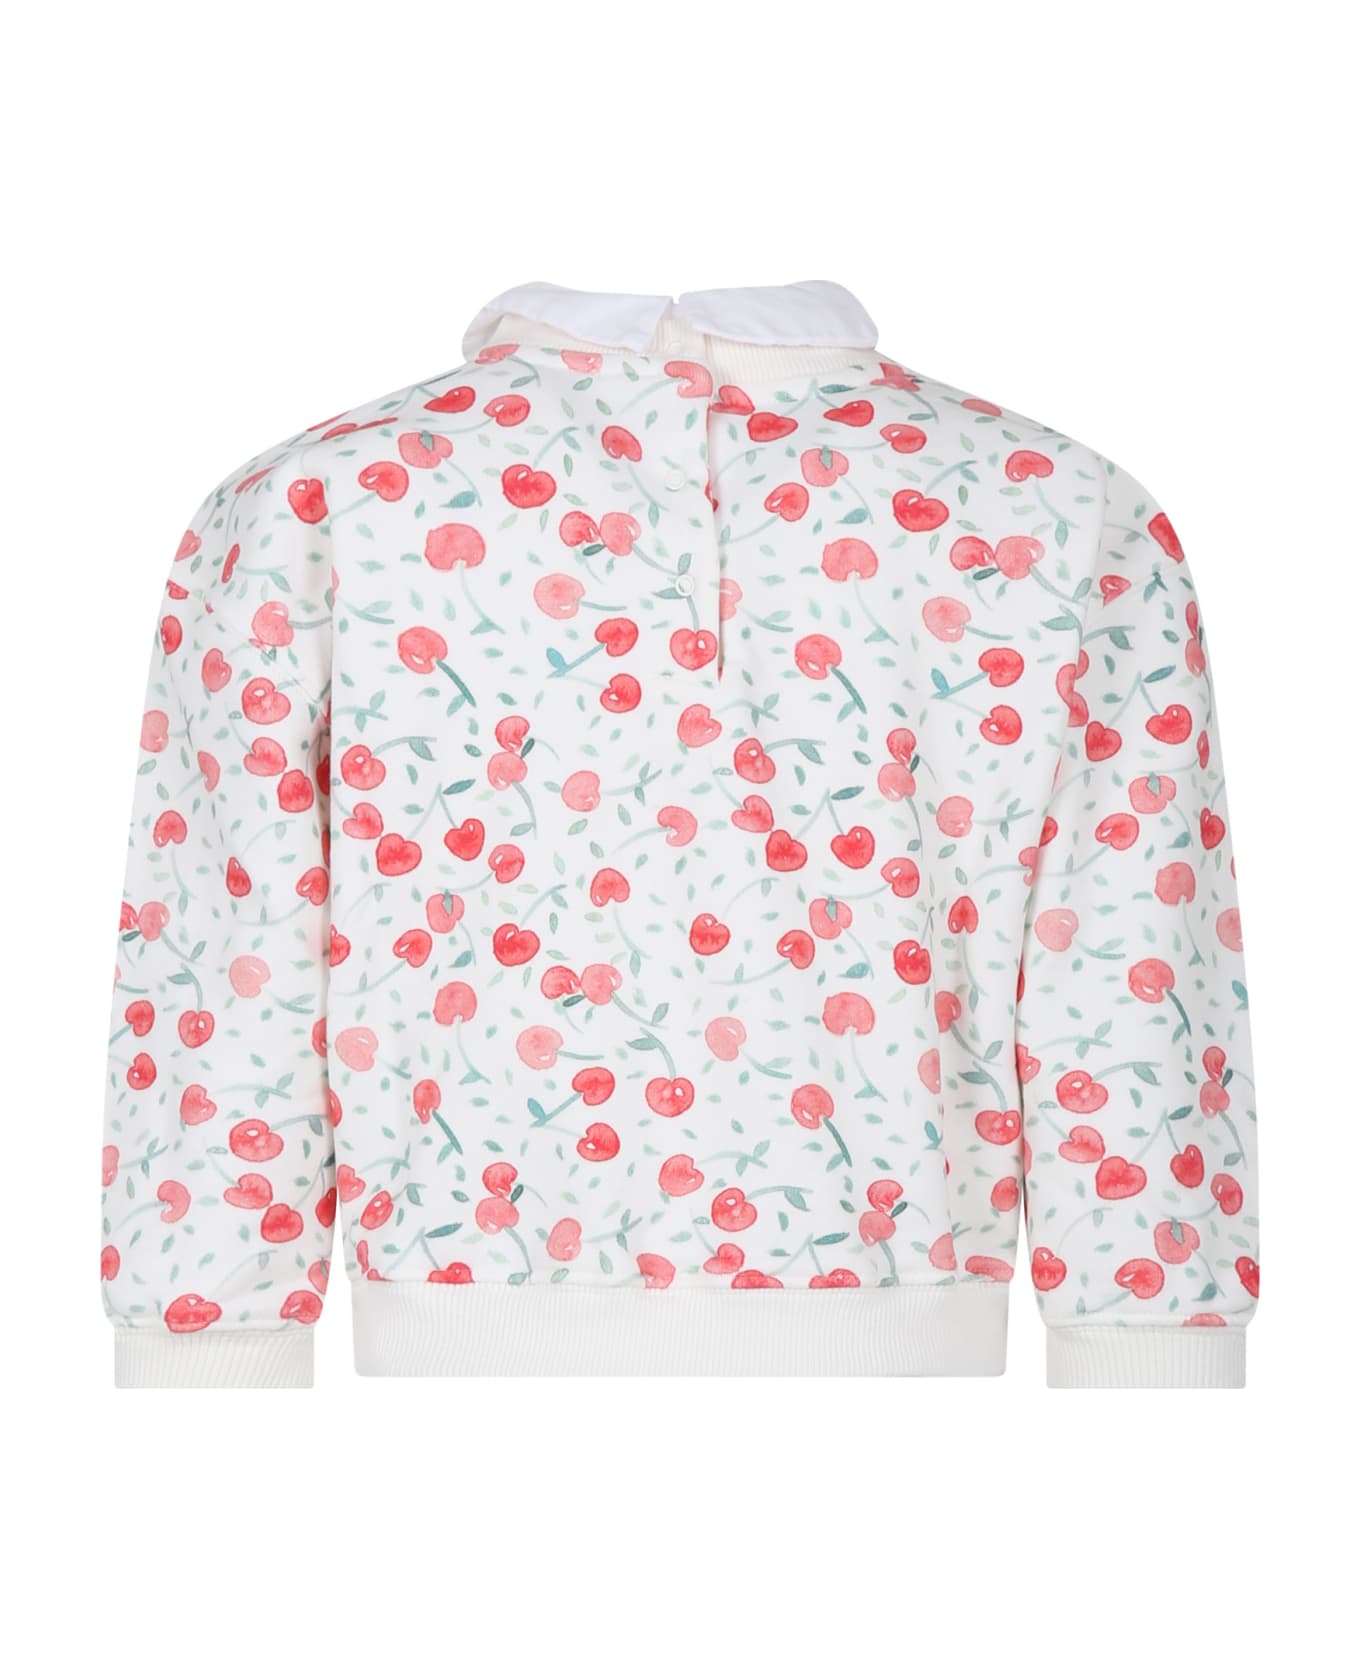 Bonpoint Ivory Sweatshirt For Girl With Iconic Cherries - White ニットウェア＆スウェットシャツ